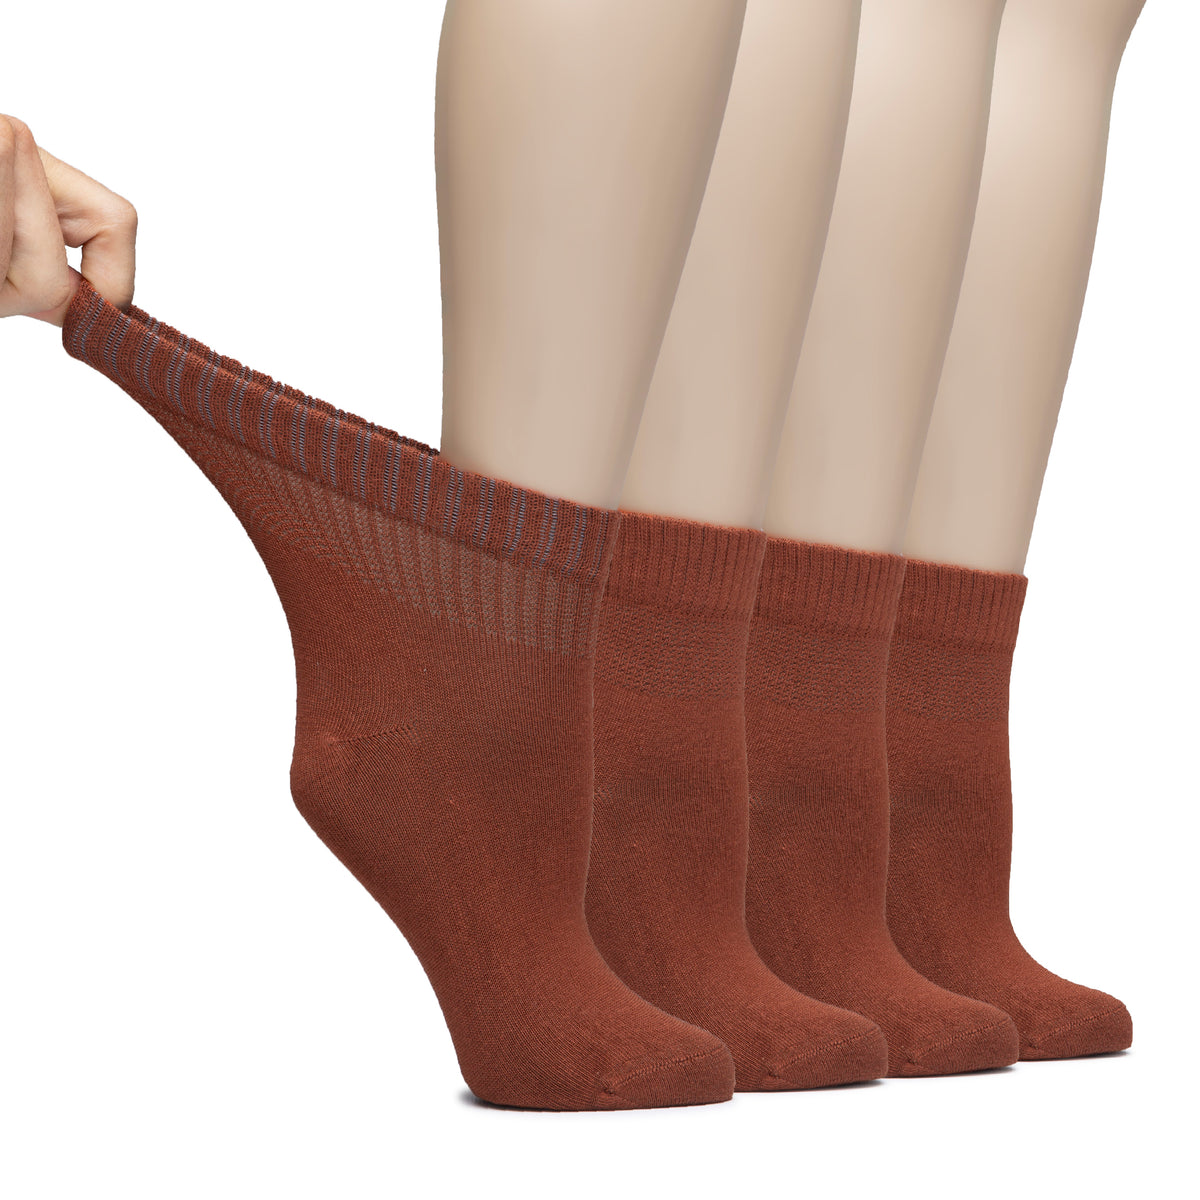 Hugh Ugoli Lightweight Women's Diabetic Ankle Socks Bamboo Thin Socks Seamless Toe and Non-Binding Top, 4 Pairs, , Shoe Size: 6-9/10-12 | Shoe Size: 10-12 | Bombay Brown